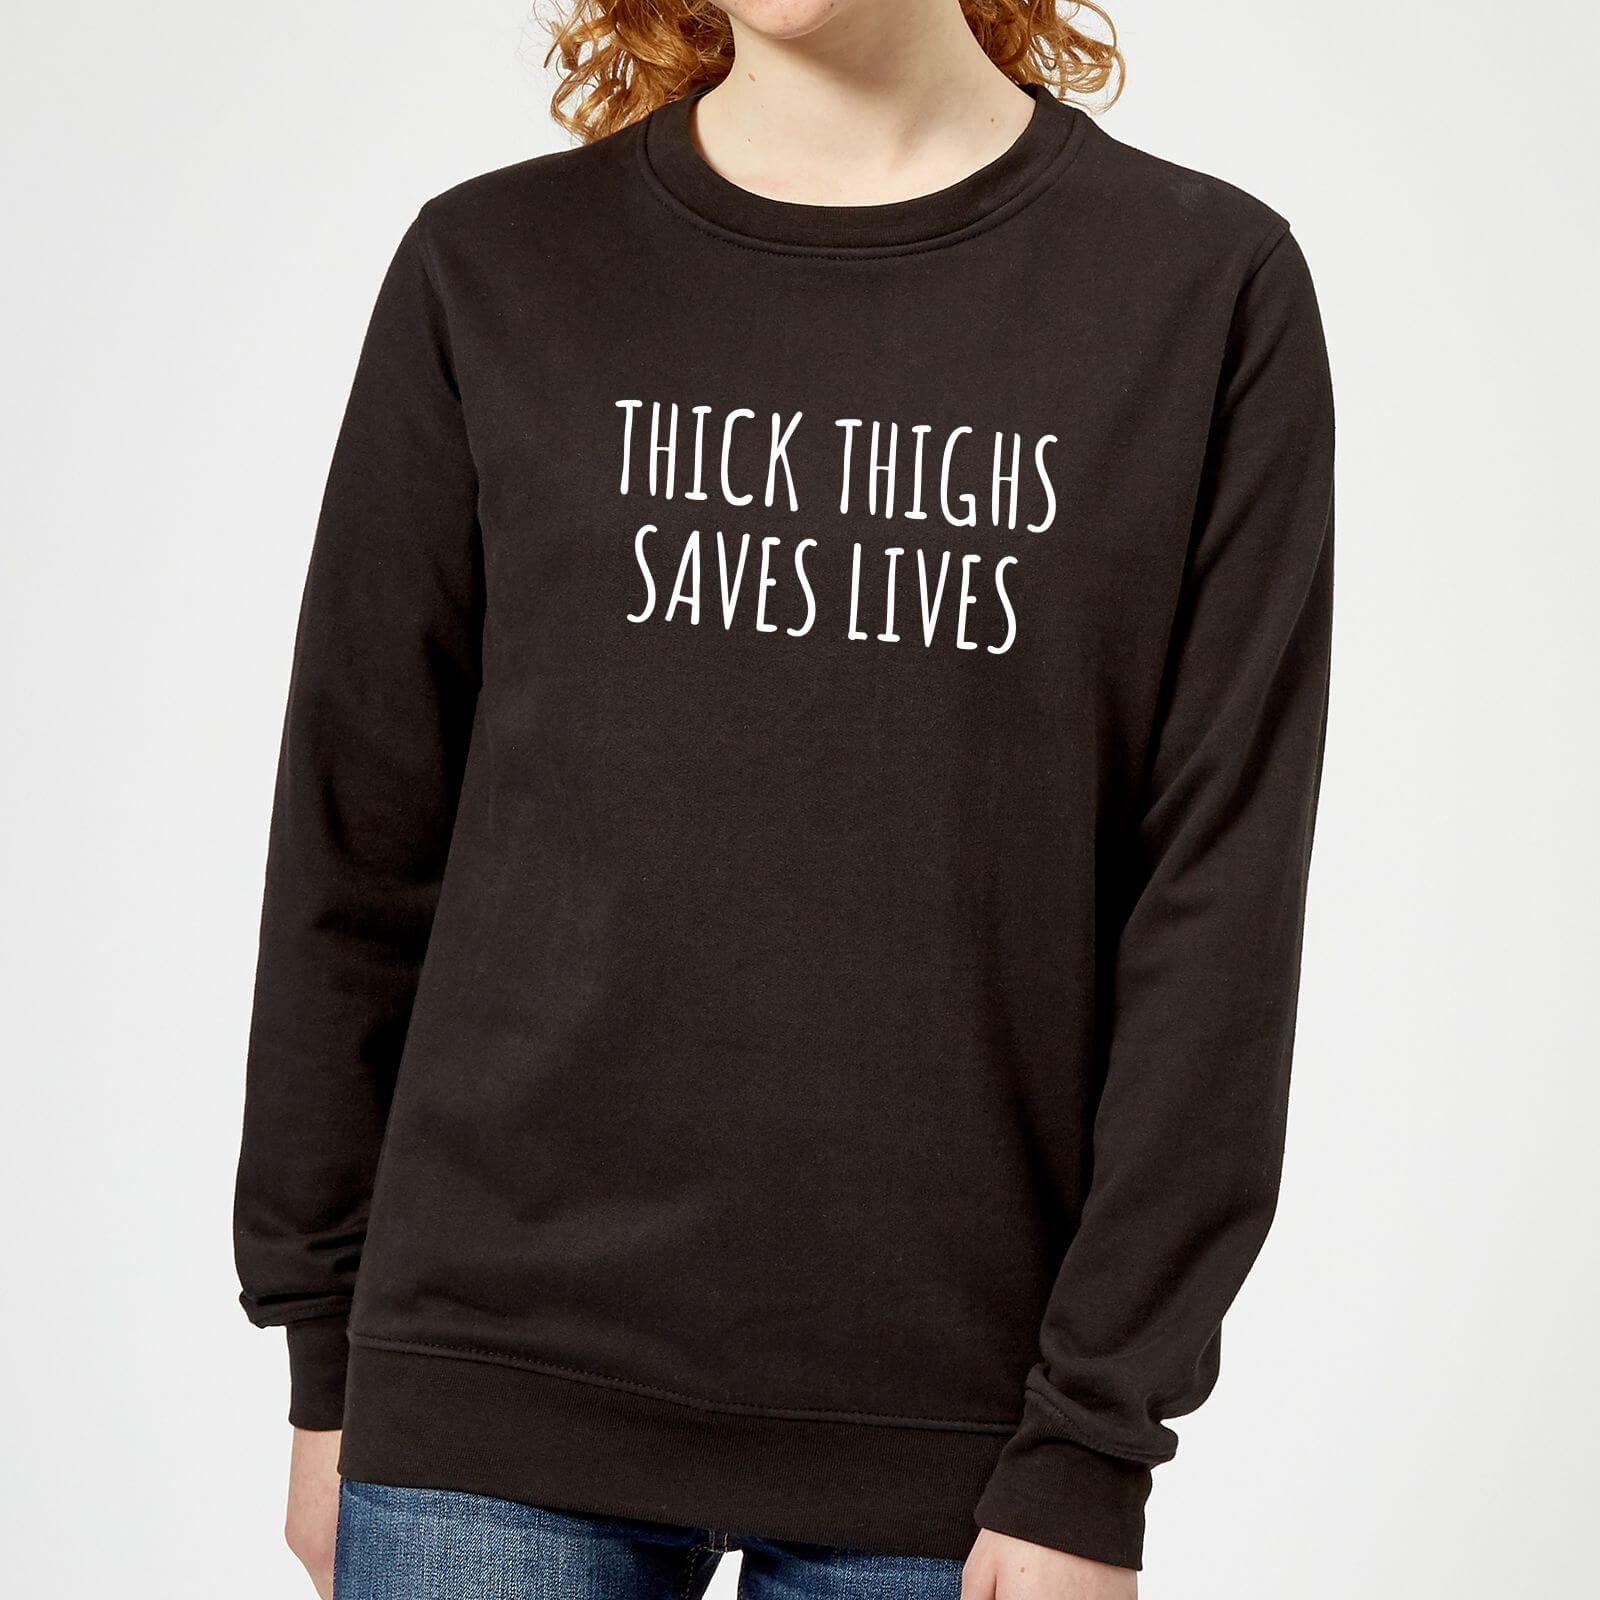 Thick Thighs Saves Lives Women's Sweatshirt - Black - 5XL - Black